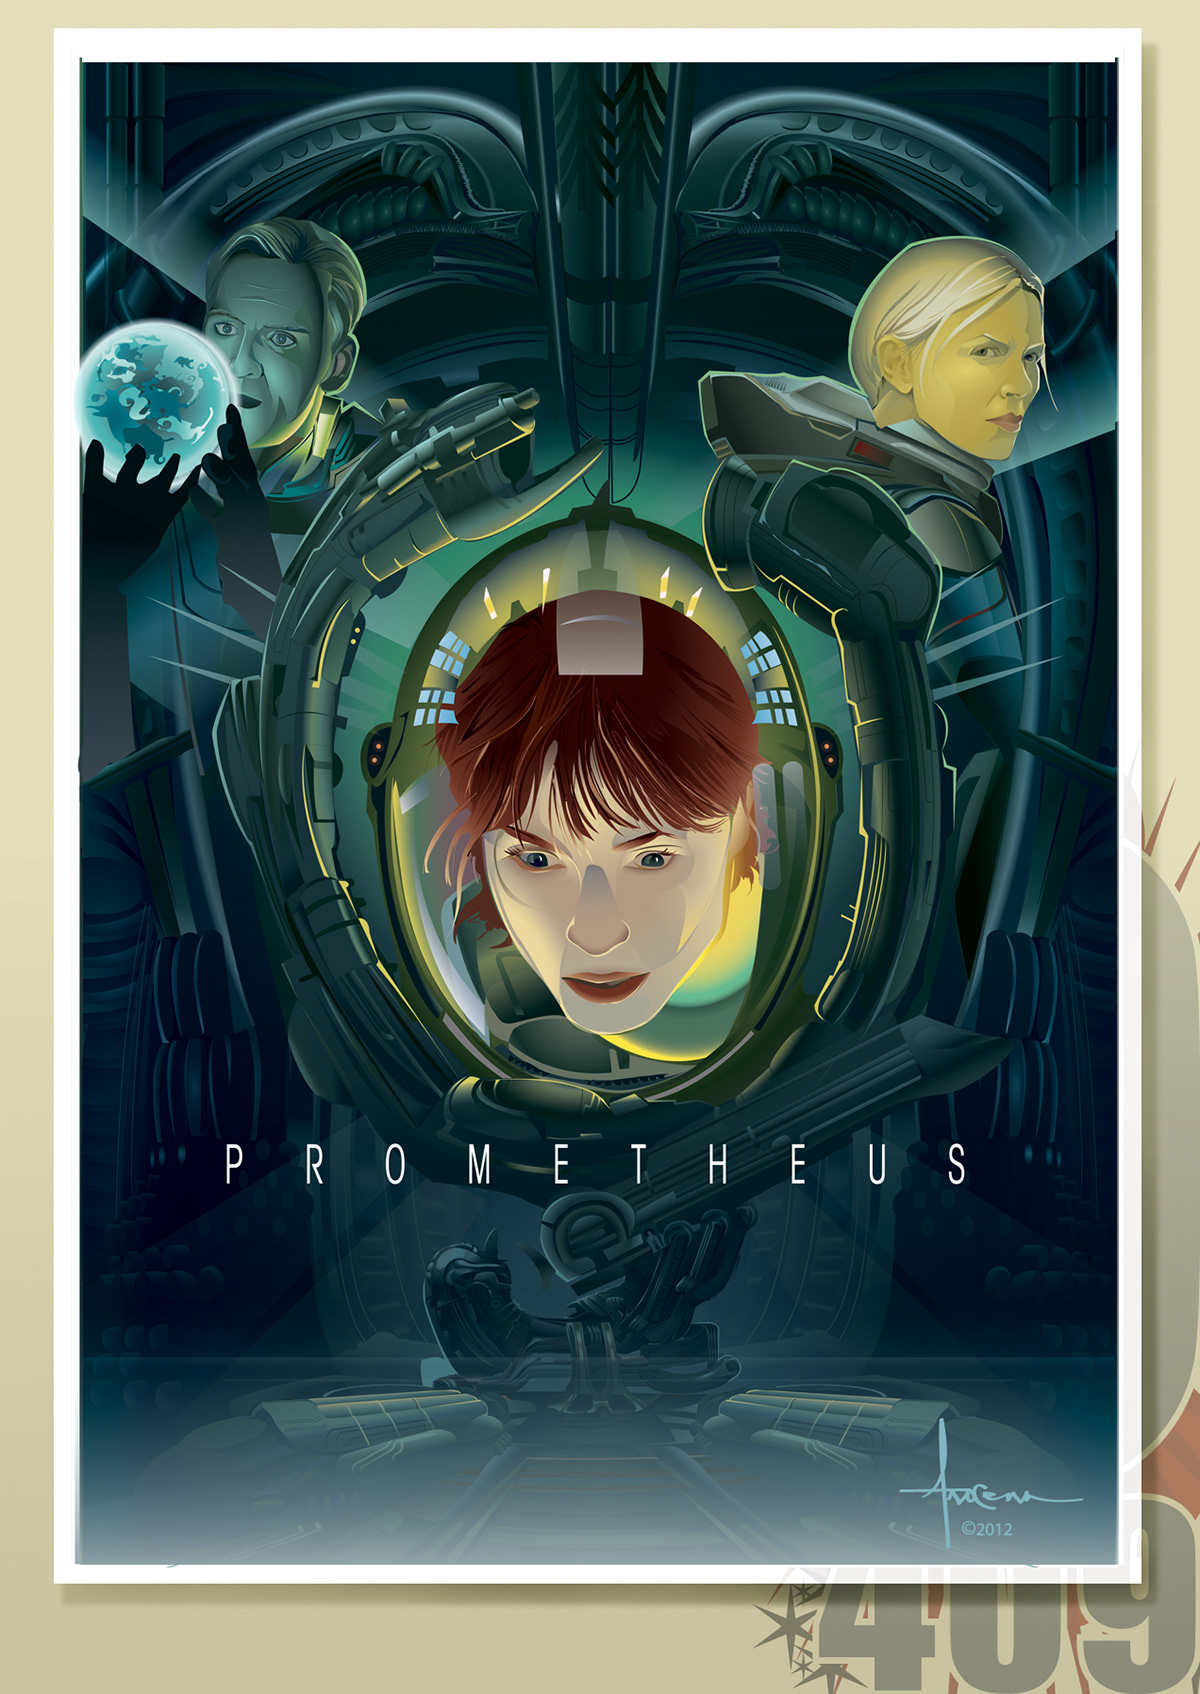 orlando arocena olo409 vector Illustrator Prometheus alien Ridley Scott charlize theron sci-fi horror movie poster